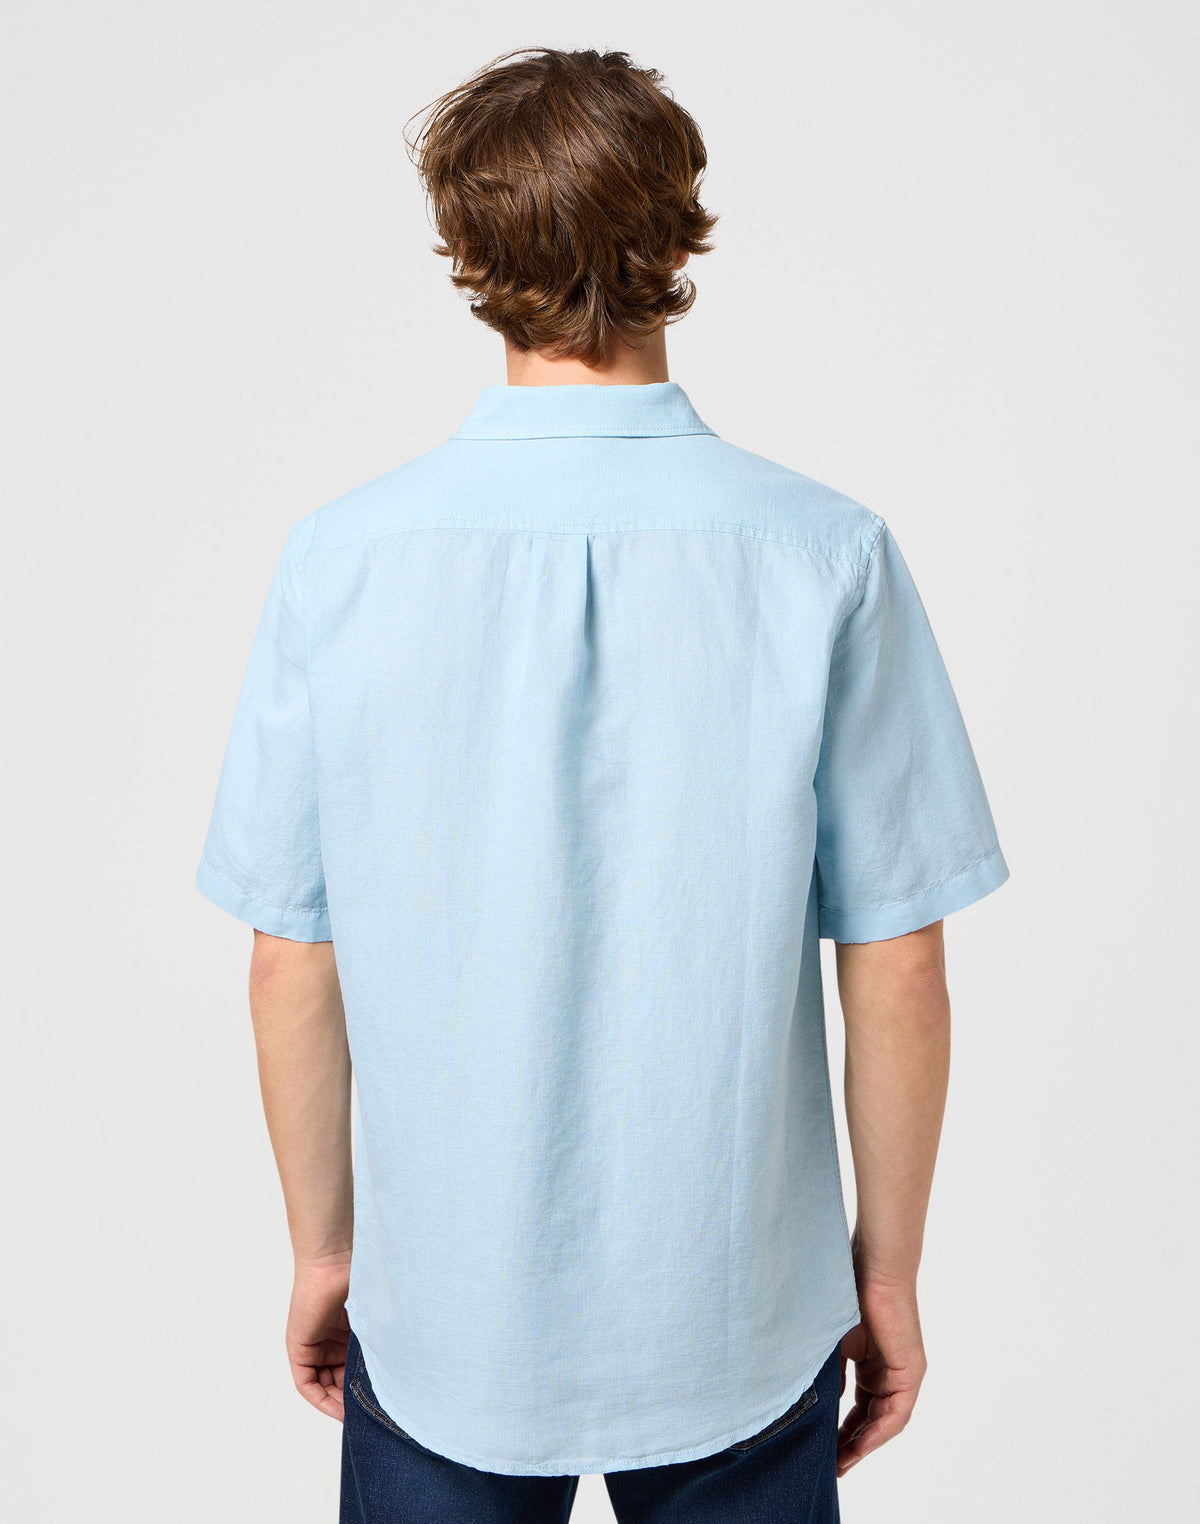 One Pocket Shirt in Dream Blue